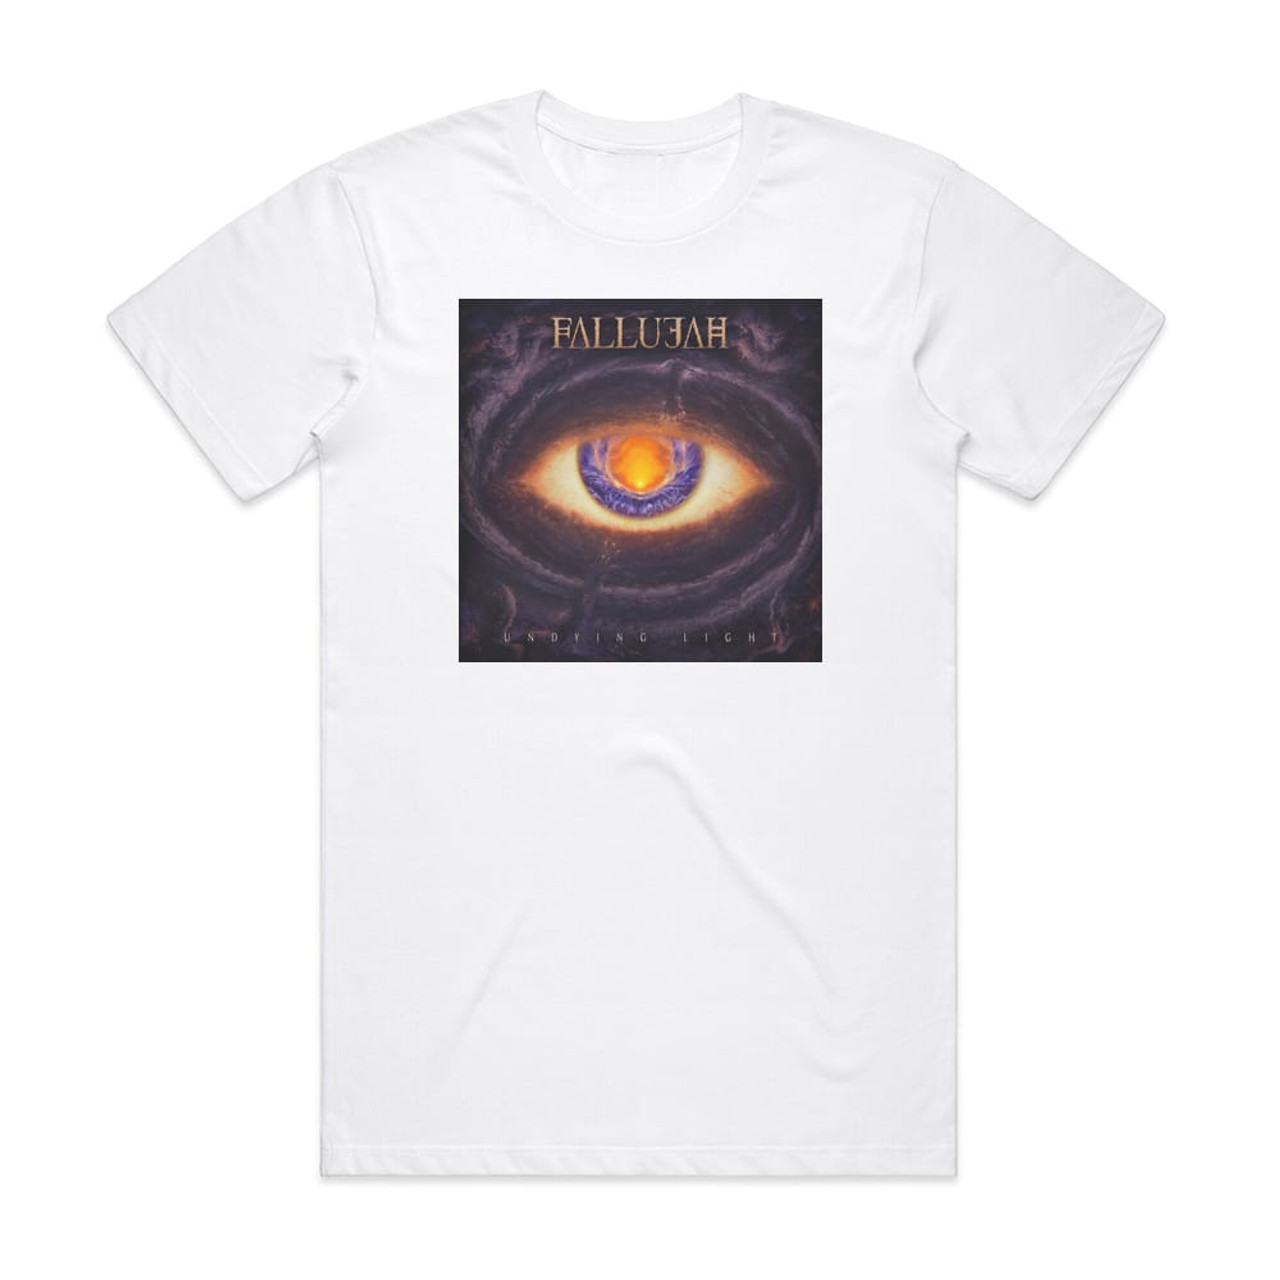 Fallujah Undying Light Album Cover T-Shirt White